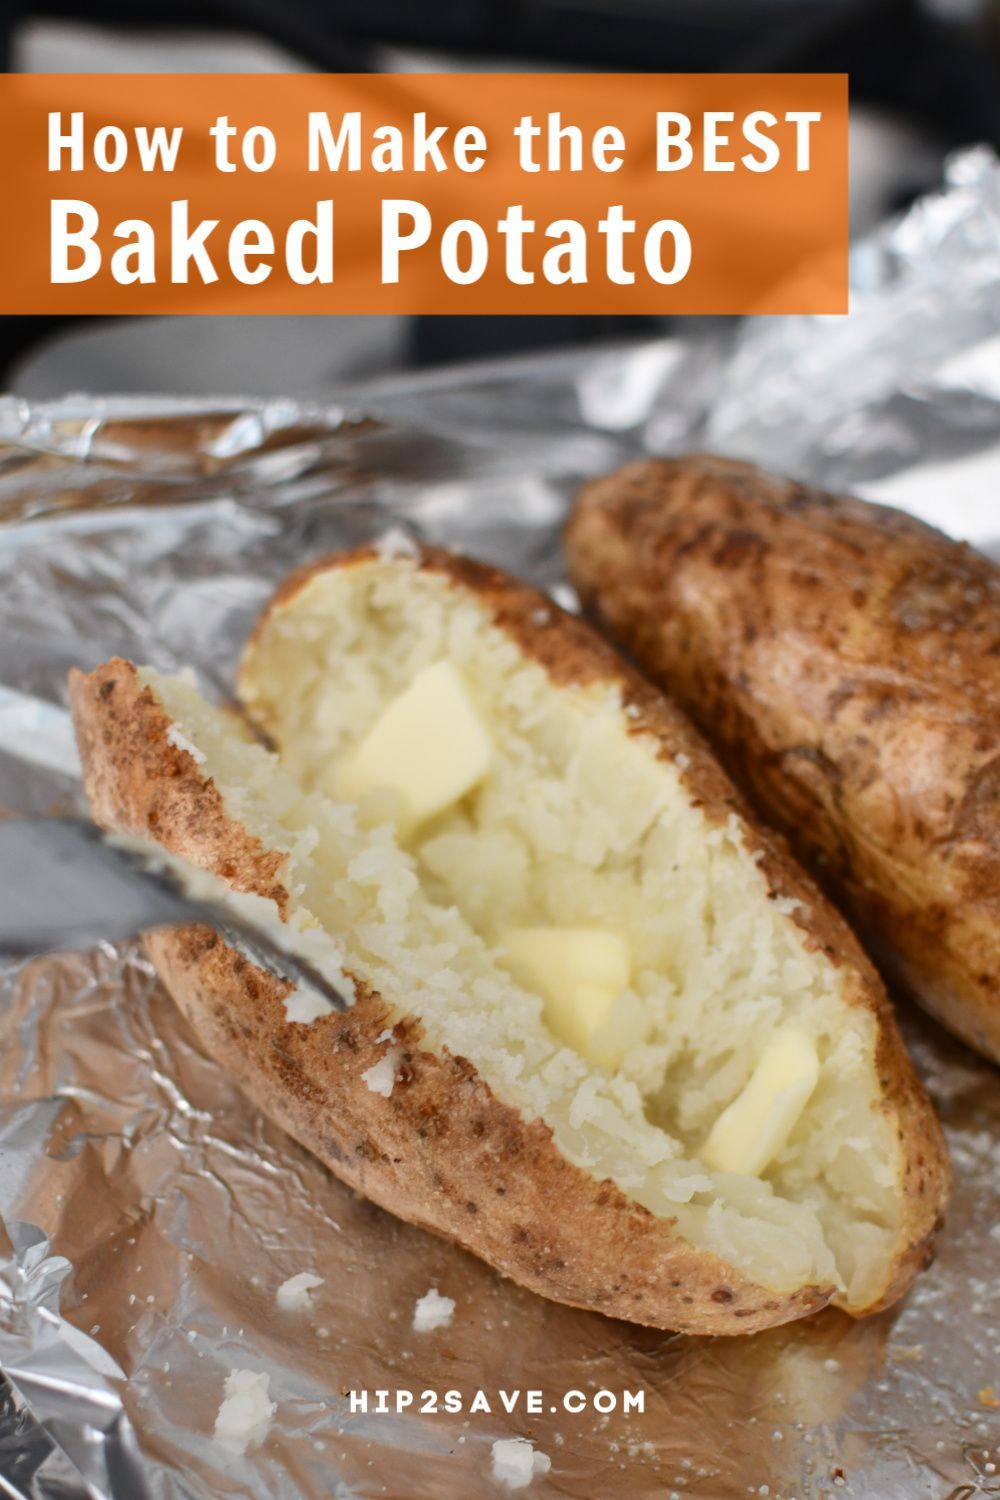 19 diy Food potato ideas